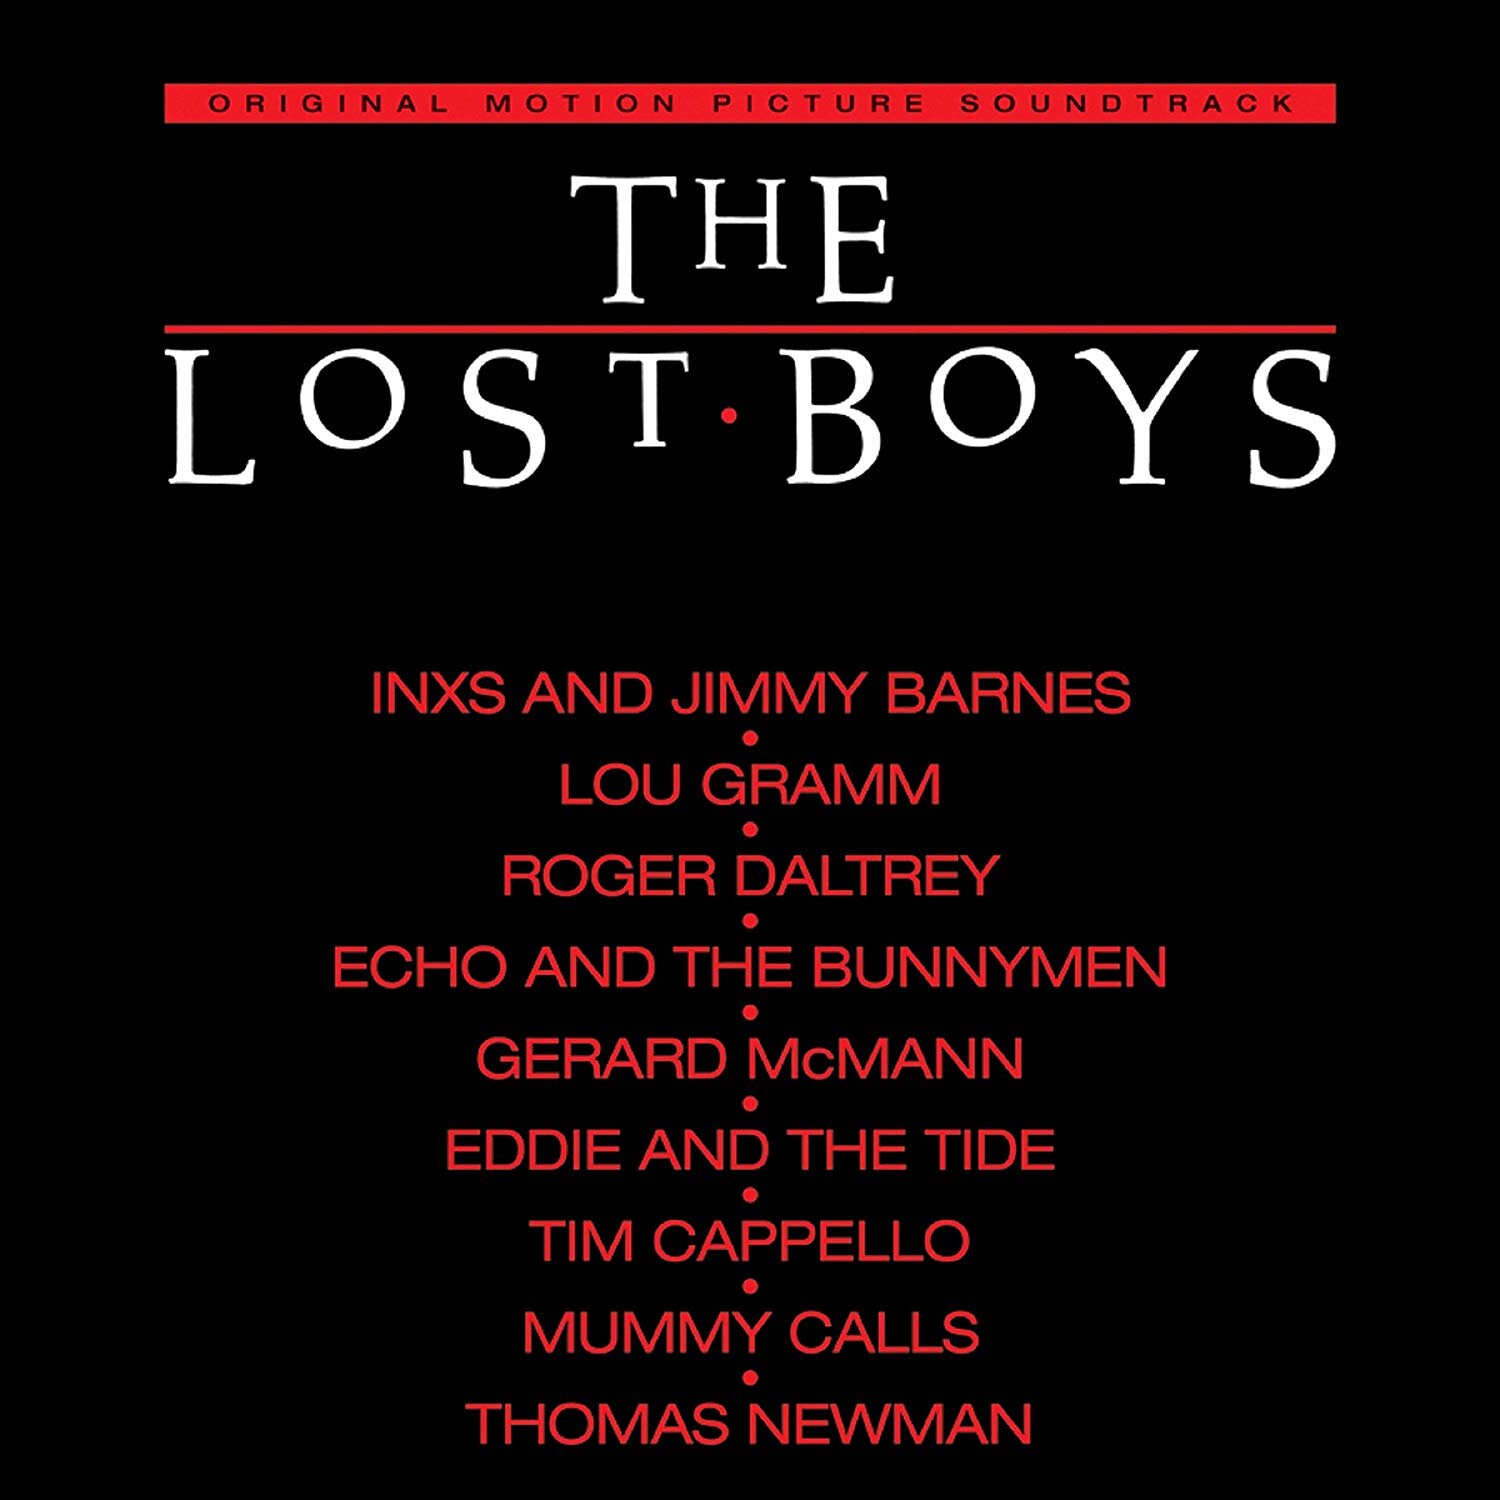 LostBoysThe_Soundtrack.jpg